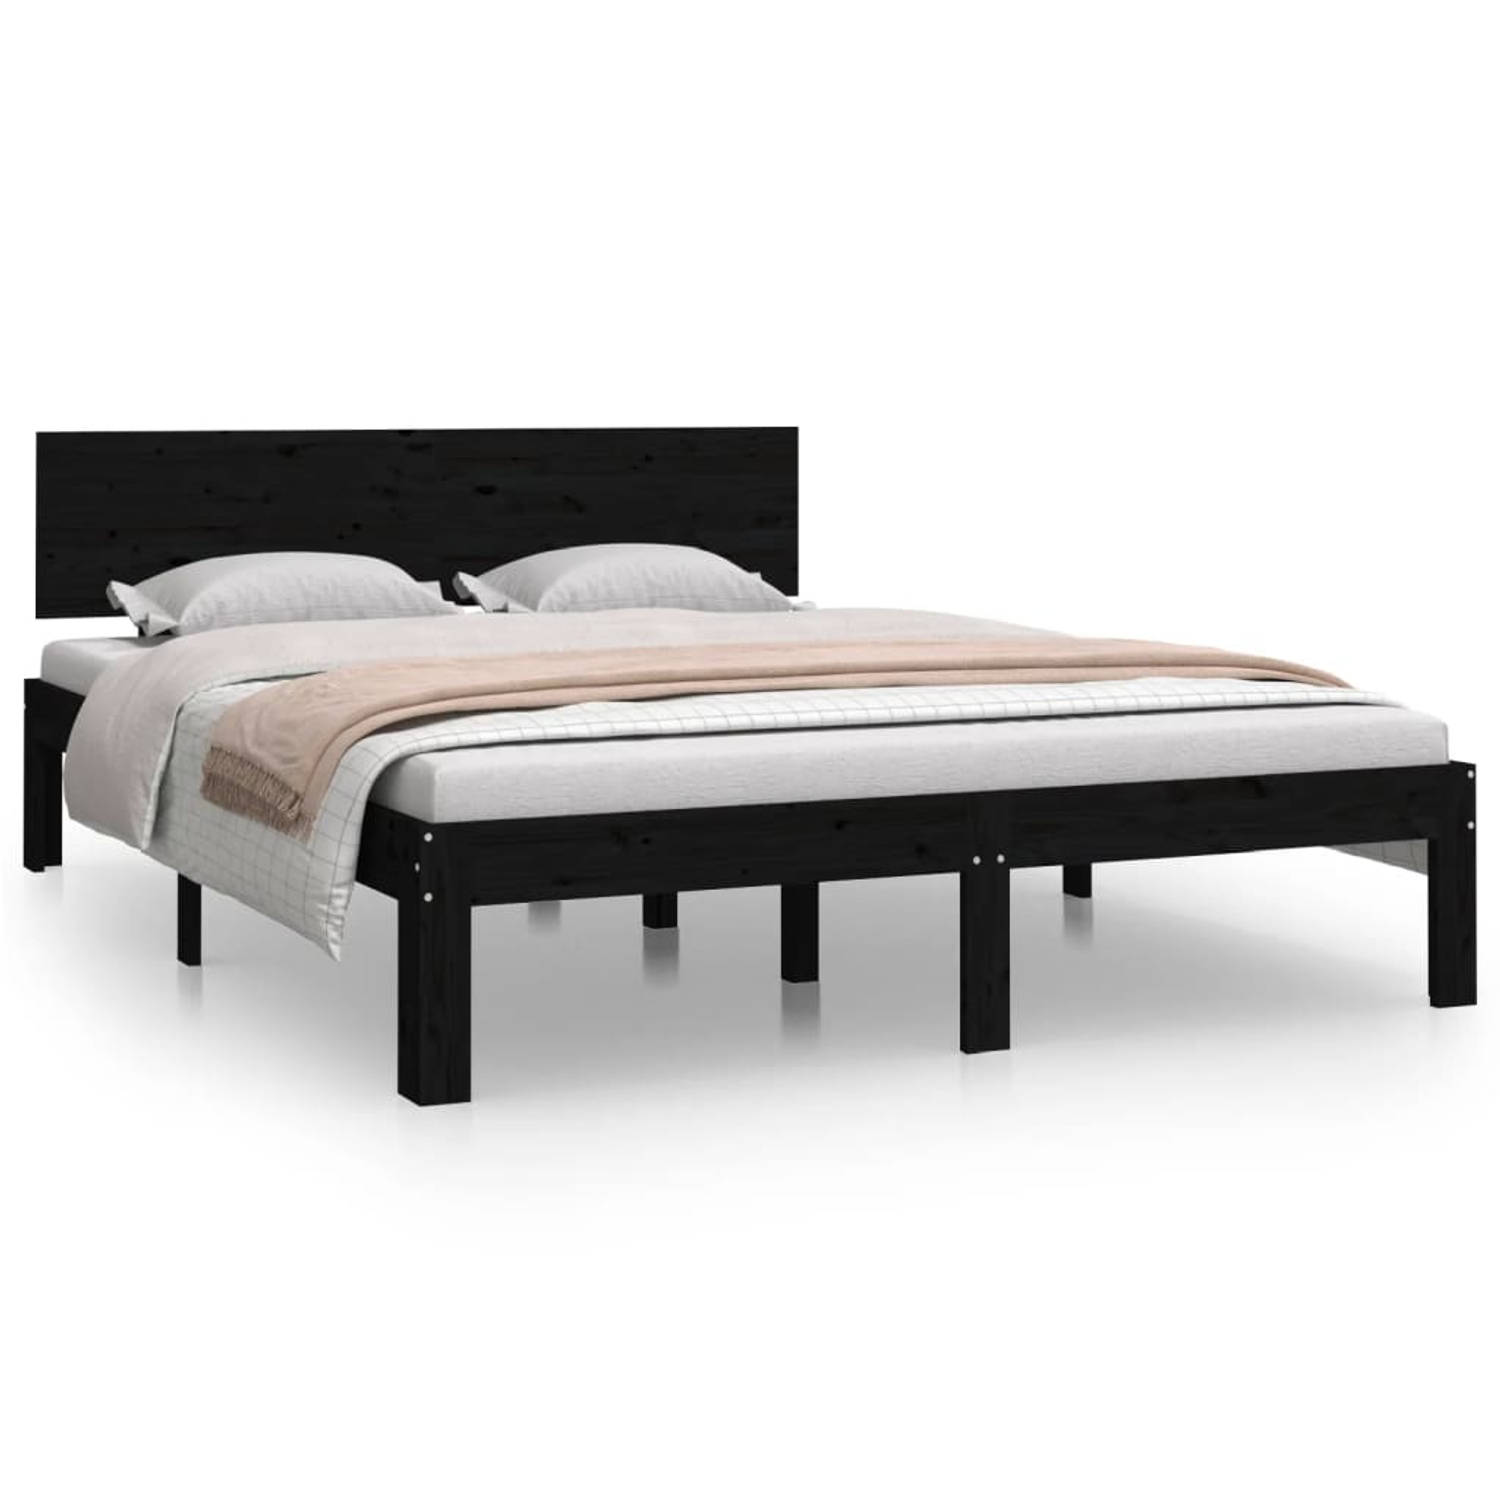 The Living Store Bedframe massief hout zwart 135x190 cm 4FT6 Double - Bedframe - Bedframes - Bed - Bedbodem - Ledikant - Bed Frame - Massief Houten Bedframe - Slaapmeubel - Bedden